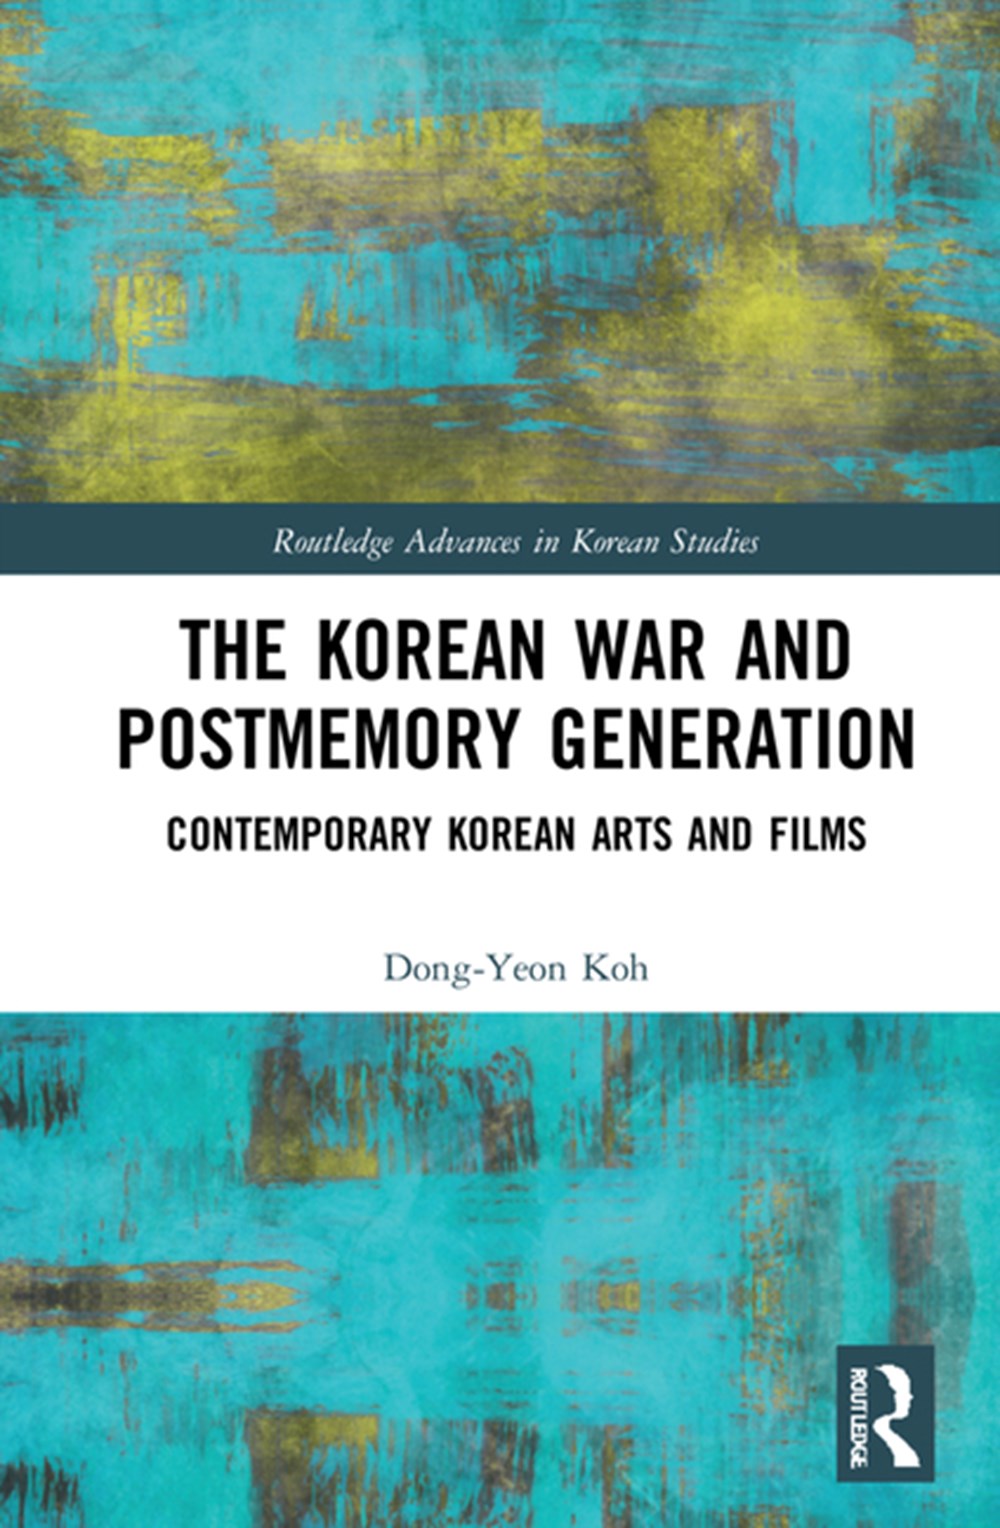 Korean War and Postmemory Generation Contemporary Korean Arts and Films